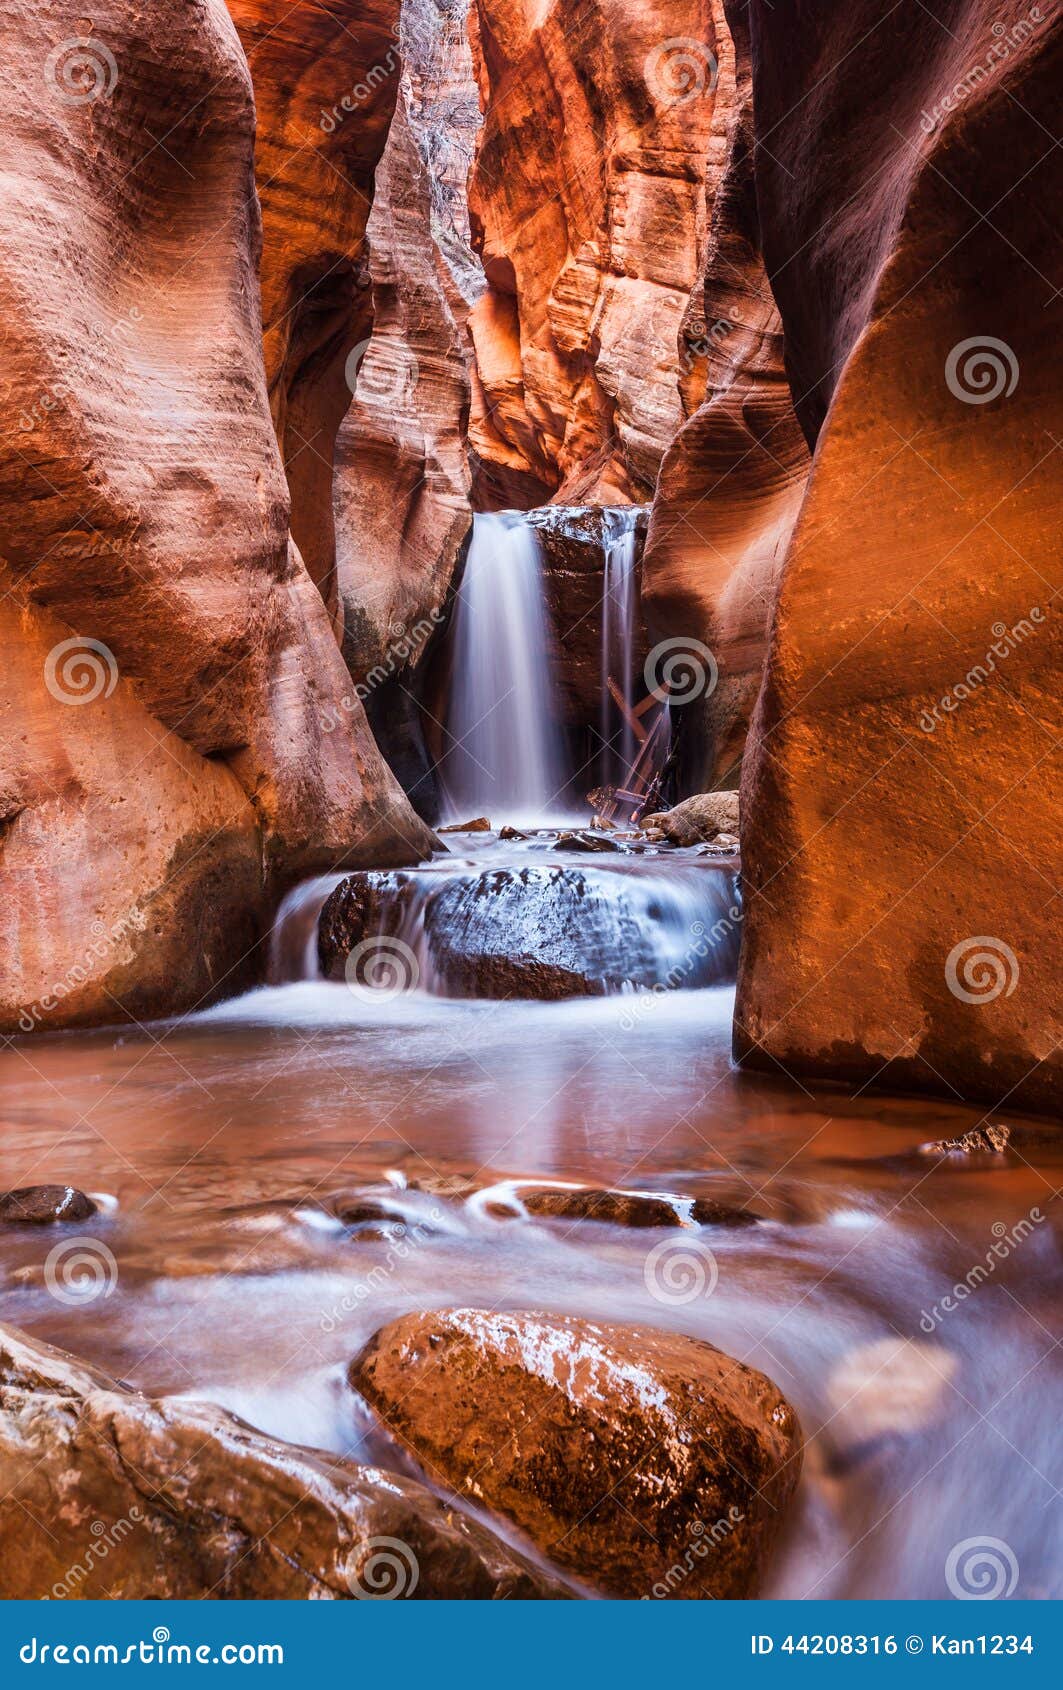 kanarra creek slot canyon in zion national park, utah